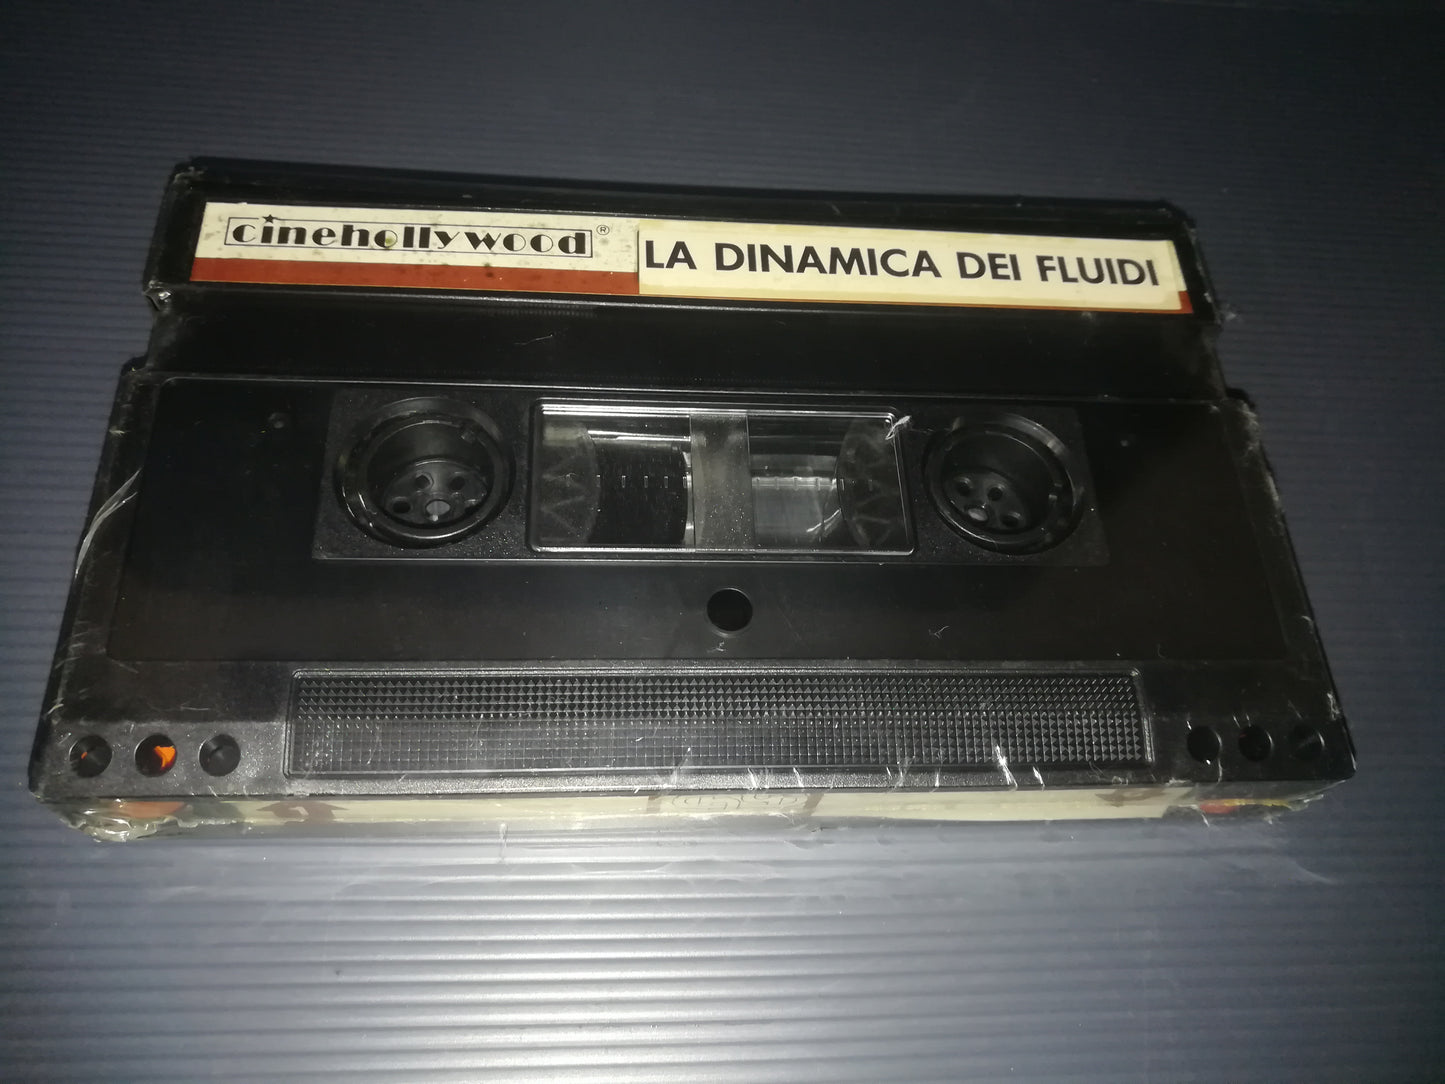 "The Dynamics of Fluids" Video Cassette 2000